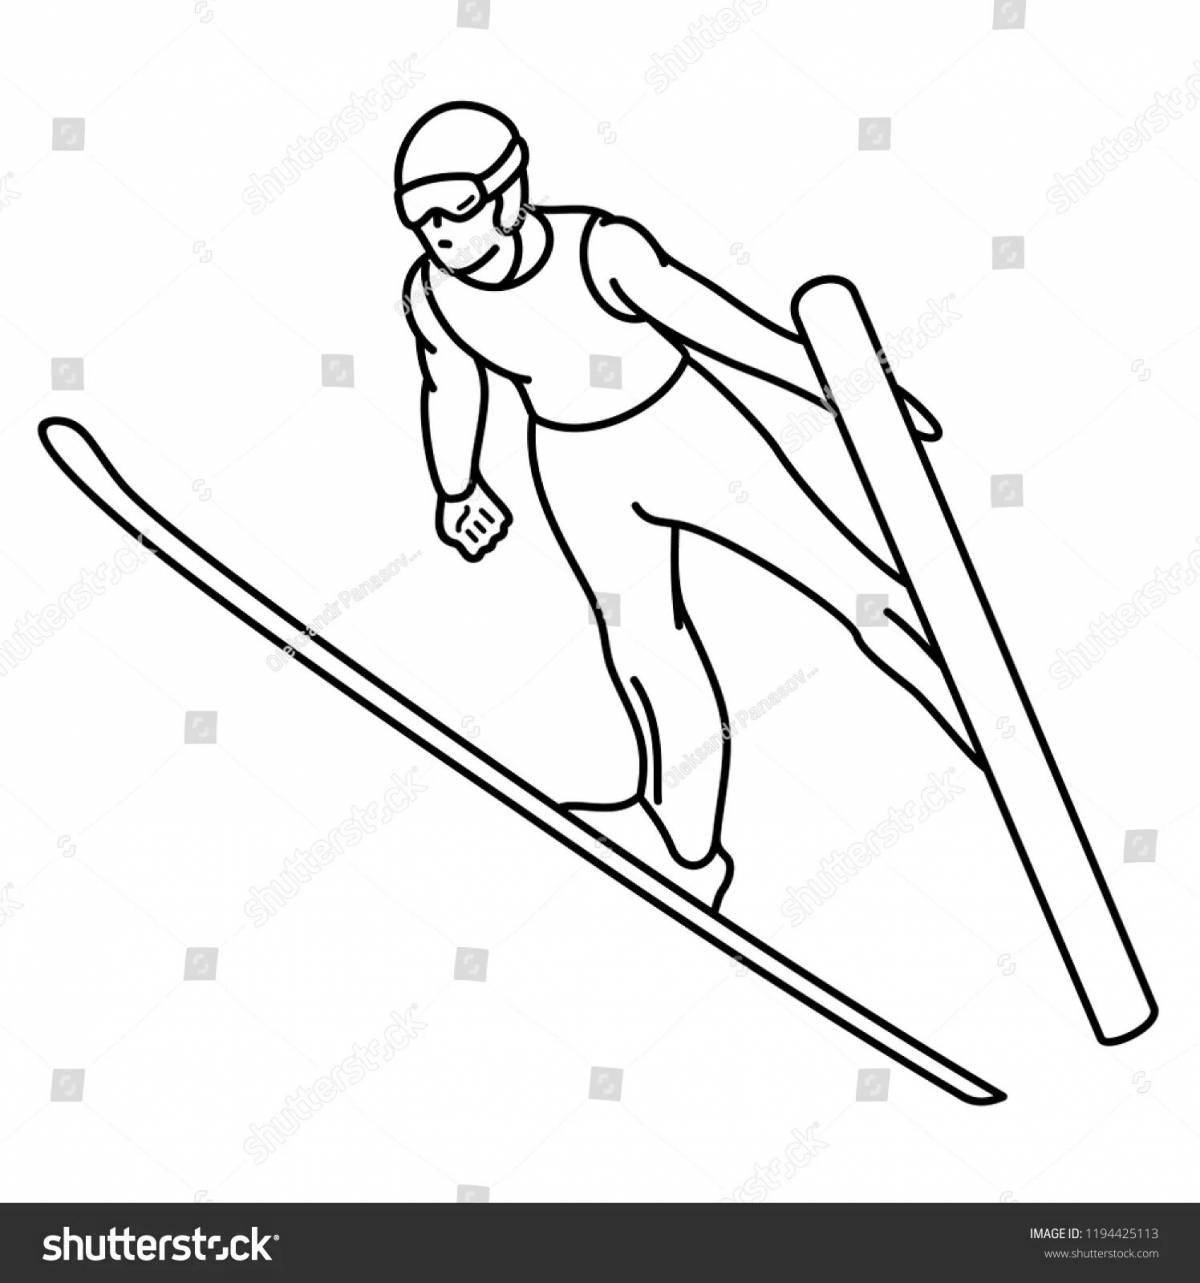 Ski jumping coloring page